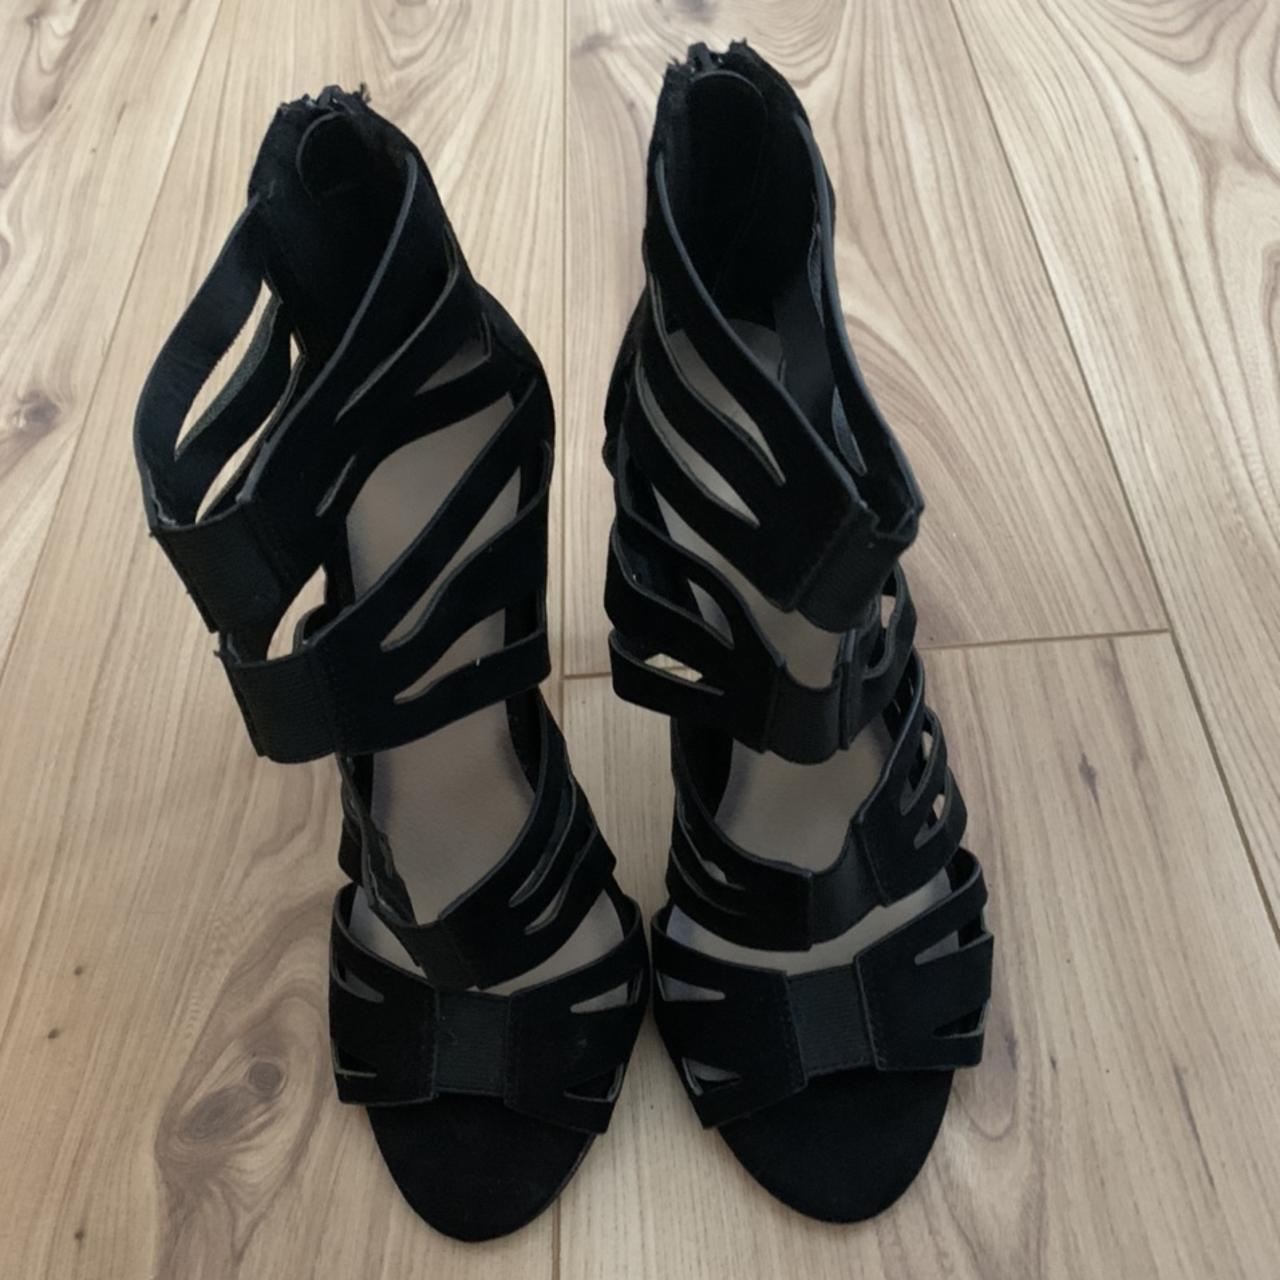 ASOS black strappy open toes stiletto heels in size... - Depop